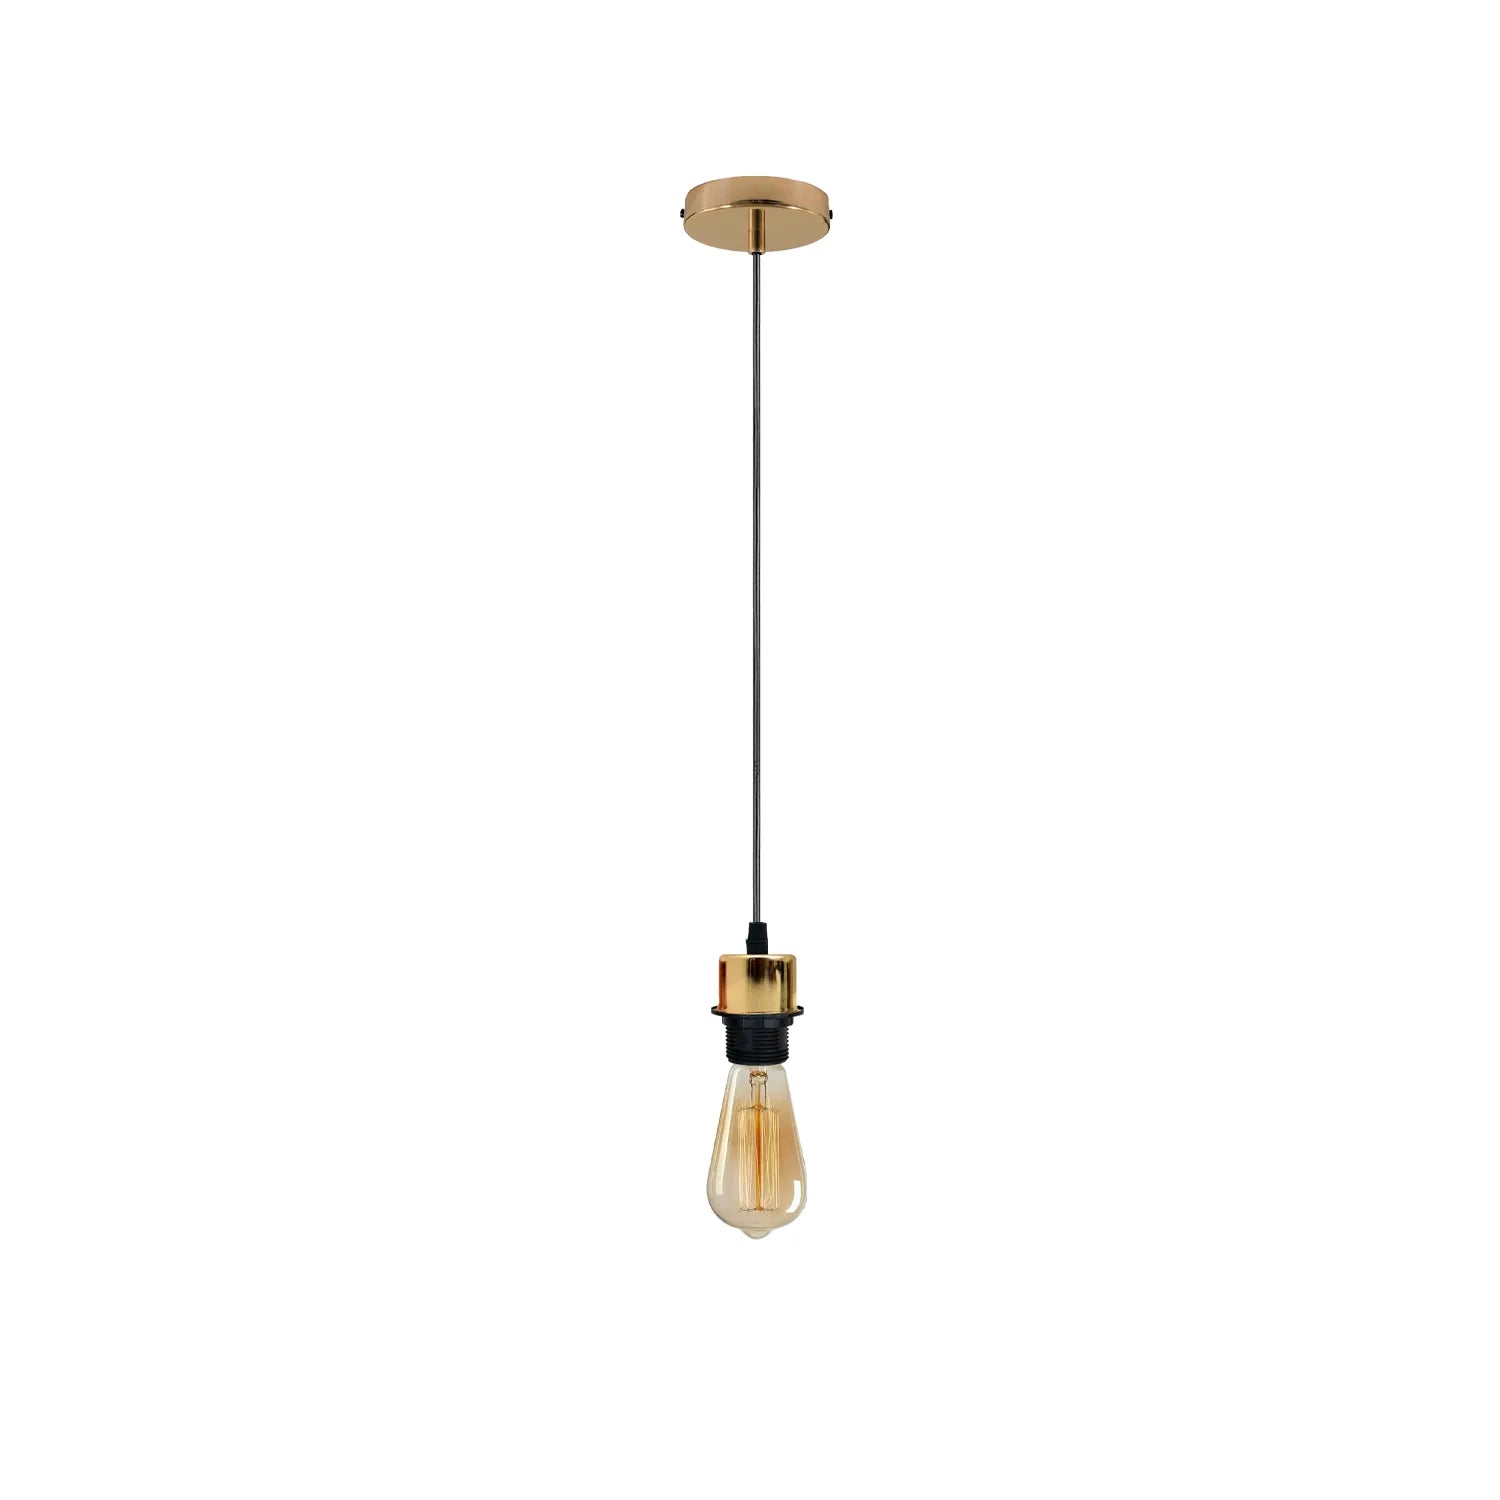 French Gold Pendant Light,E27 Lamp Holder Ceiling Hanging Light,PVC Cable~4222